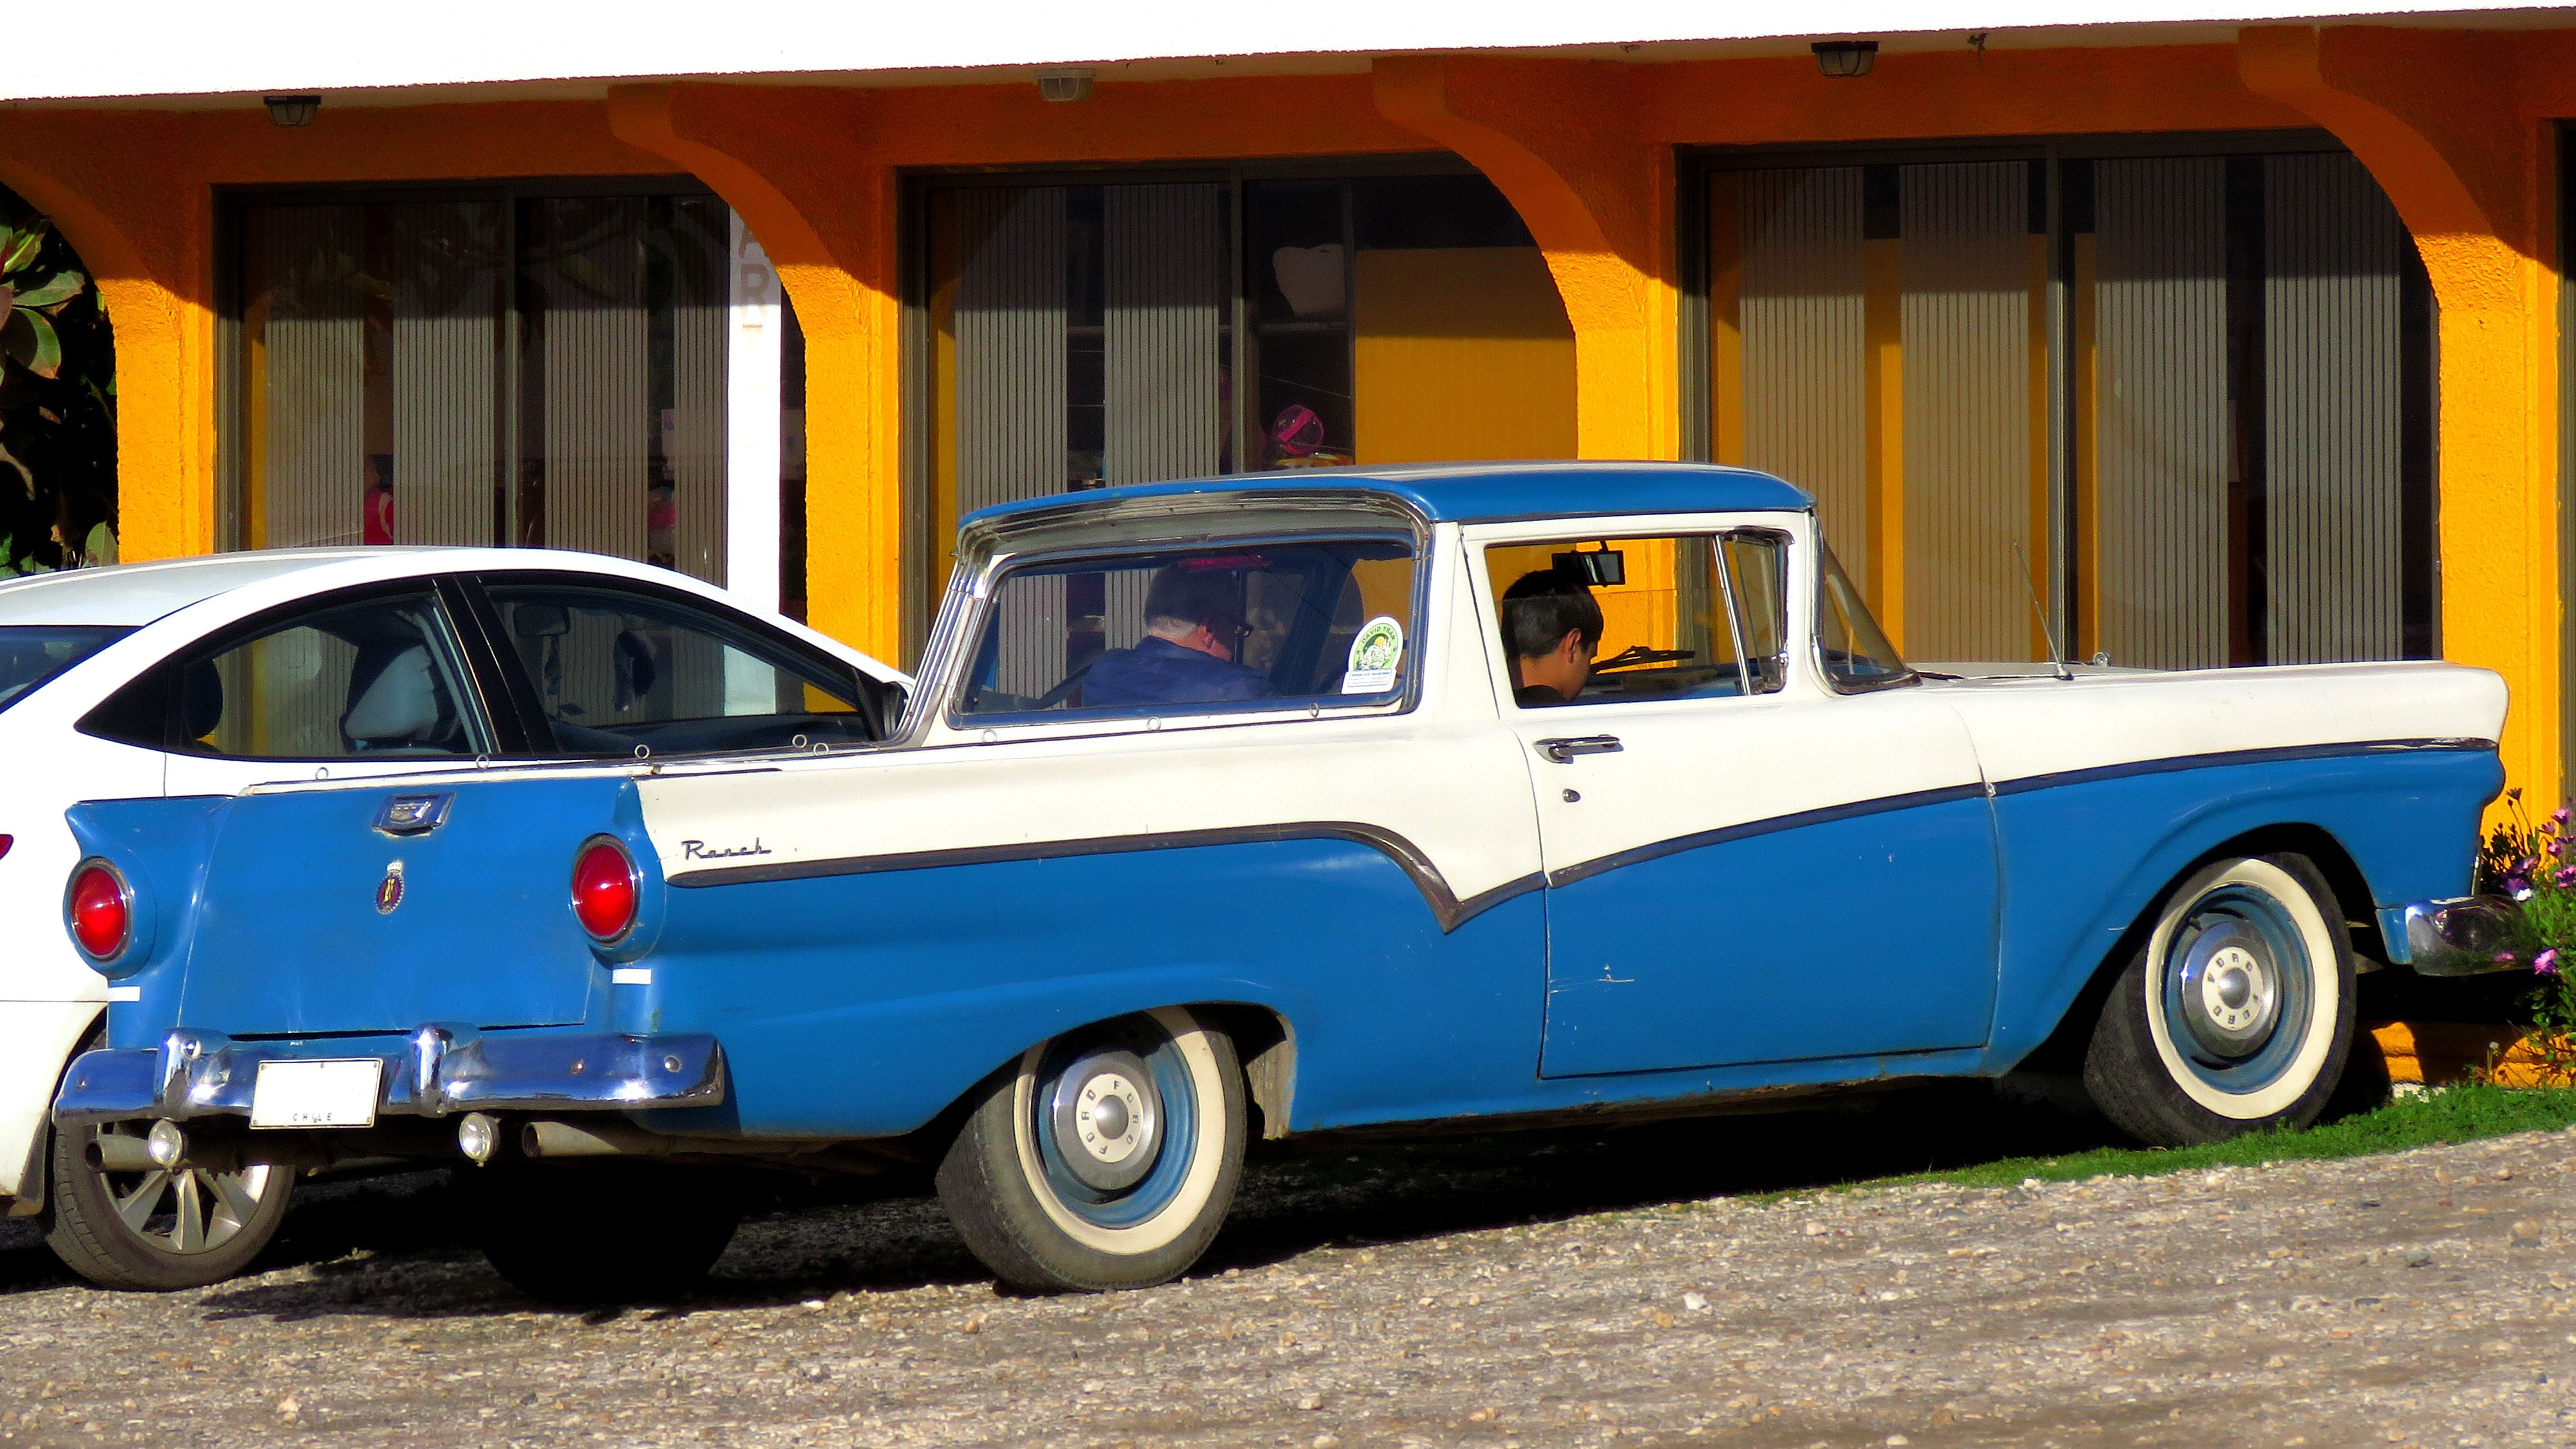 The 1957 Ford Ranchero.